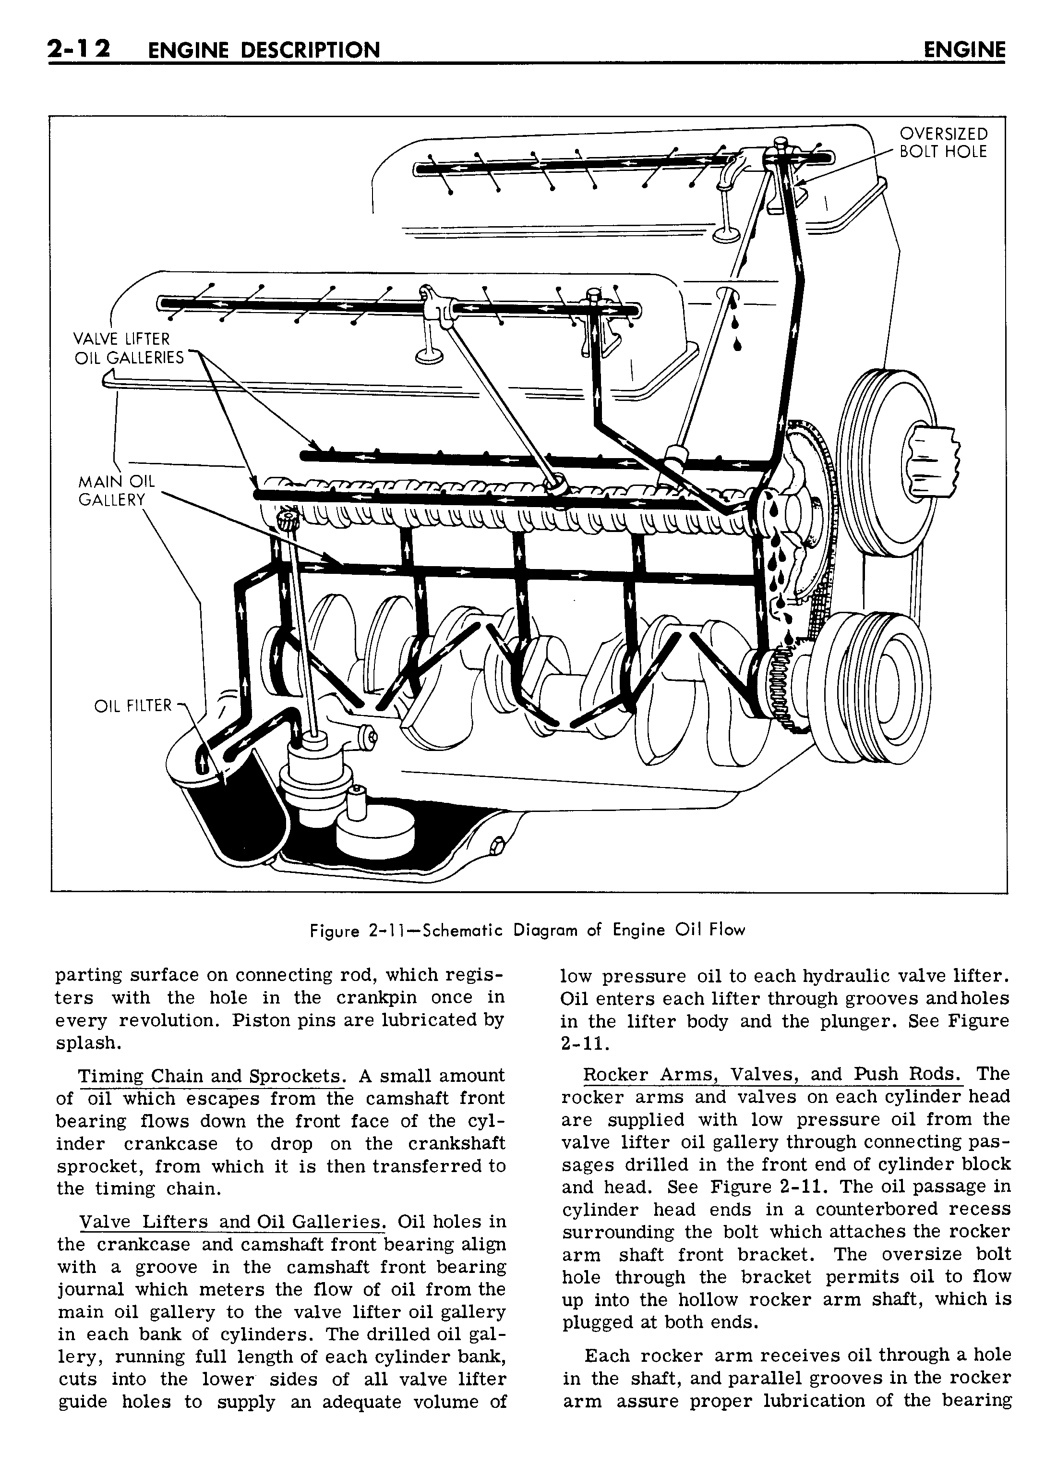 n_03 1961 Buick Shop Manual - Engine-012-012.jpg